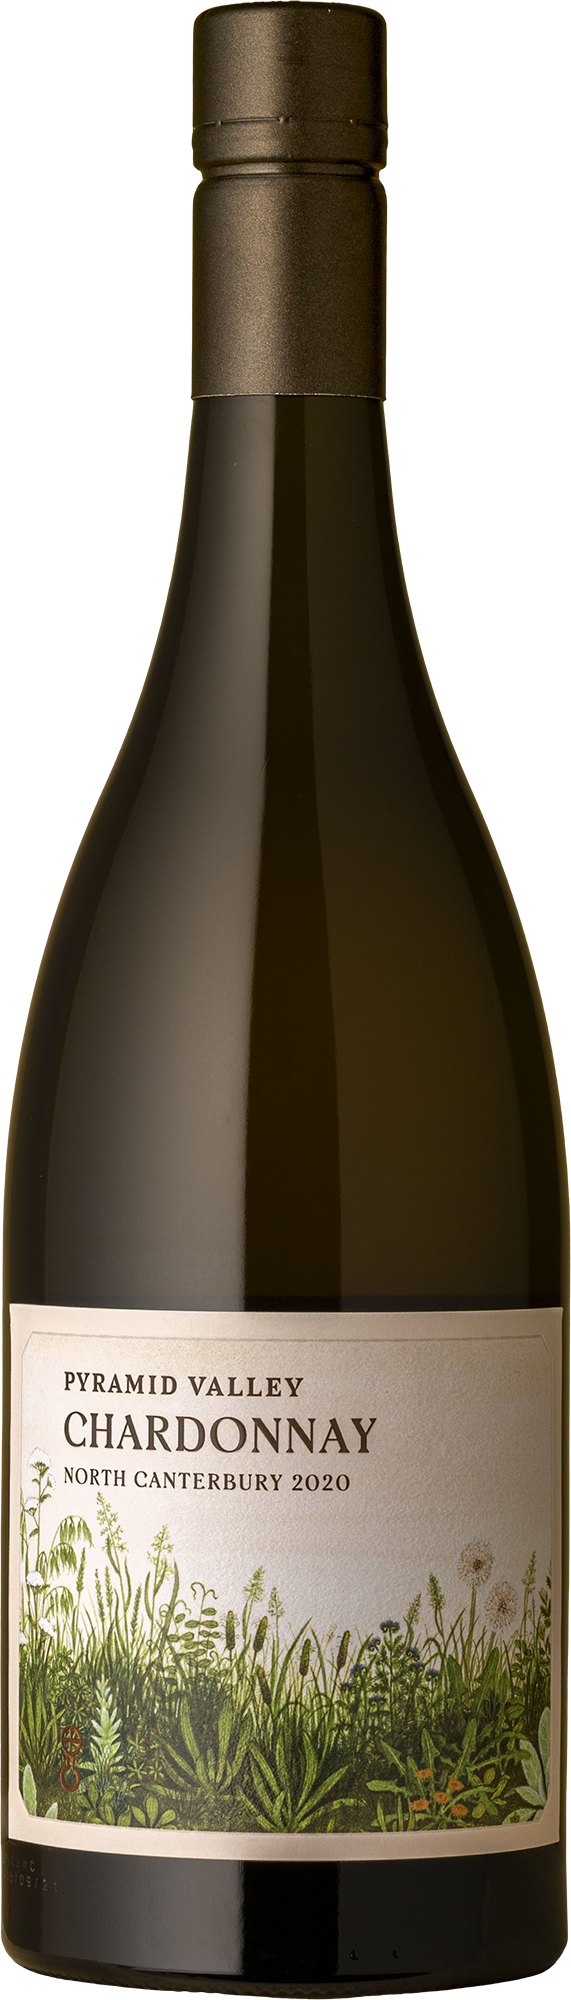 Pyramid Valley - North Canterbury Chardonnay 2020 White Wine